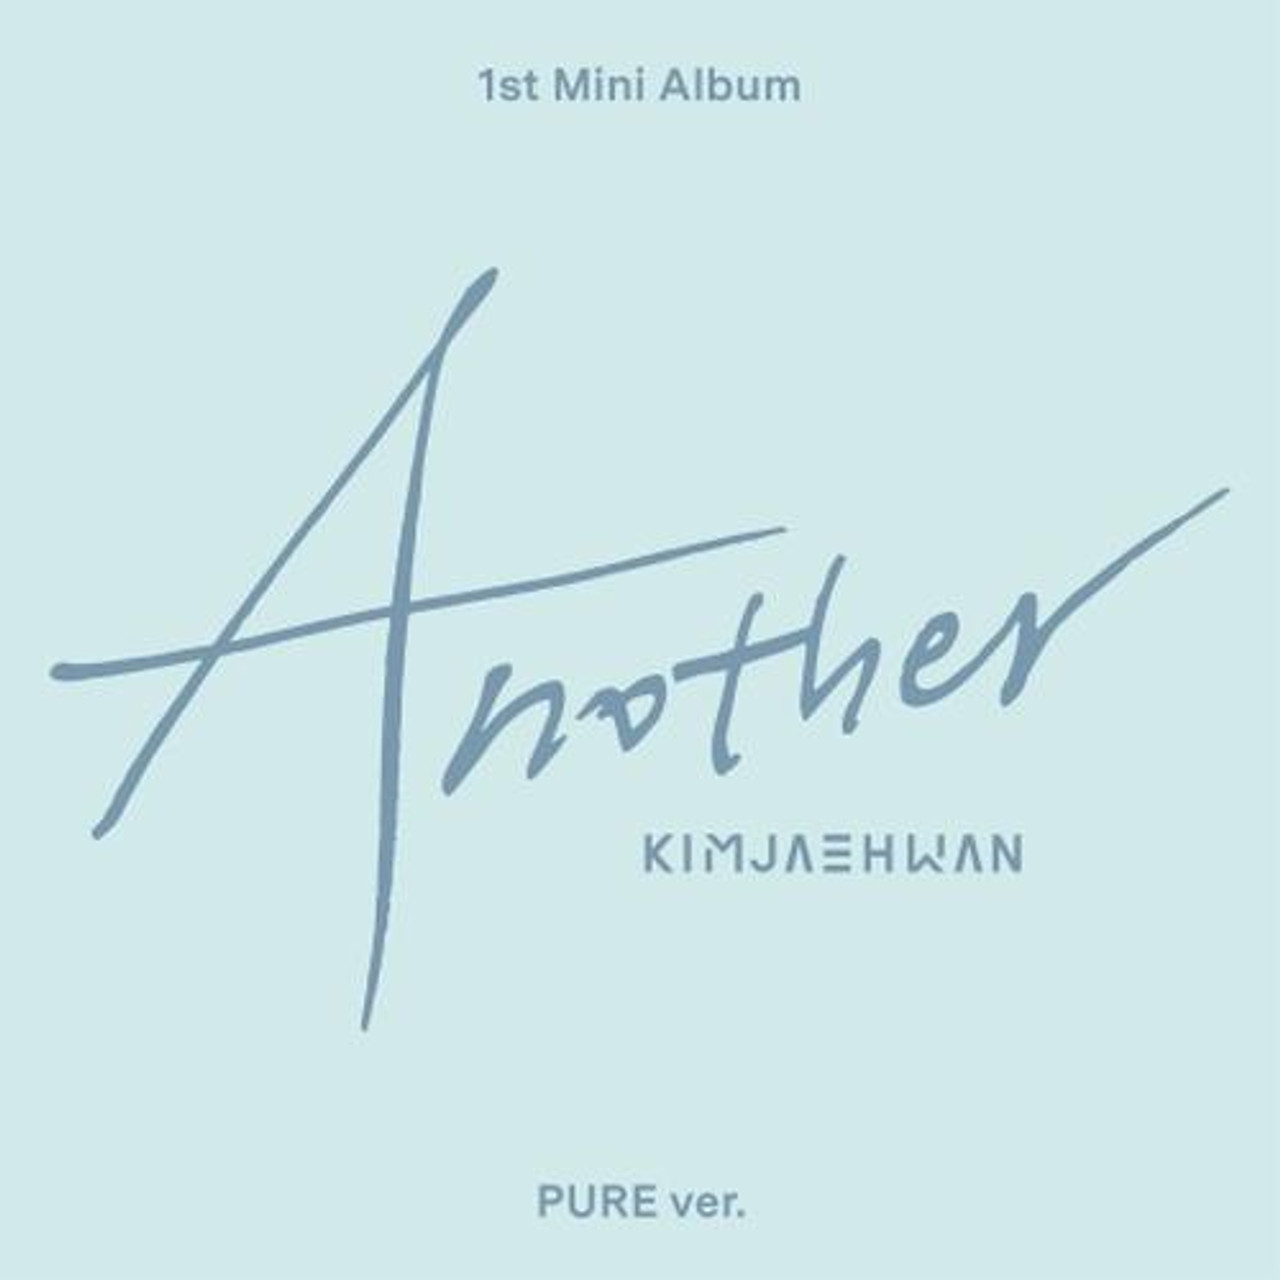 Kim Jae Hwan  1st Mini Another Pure Ver